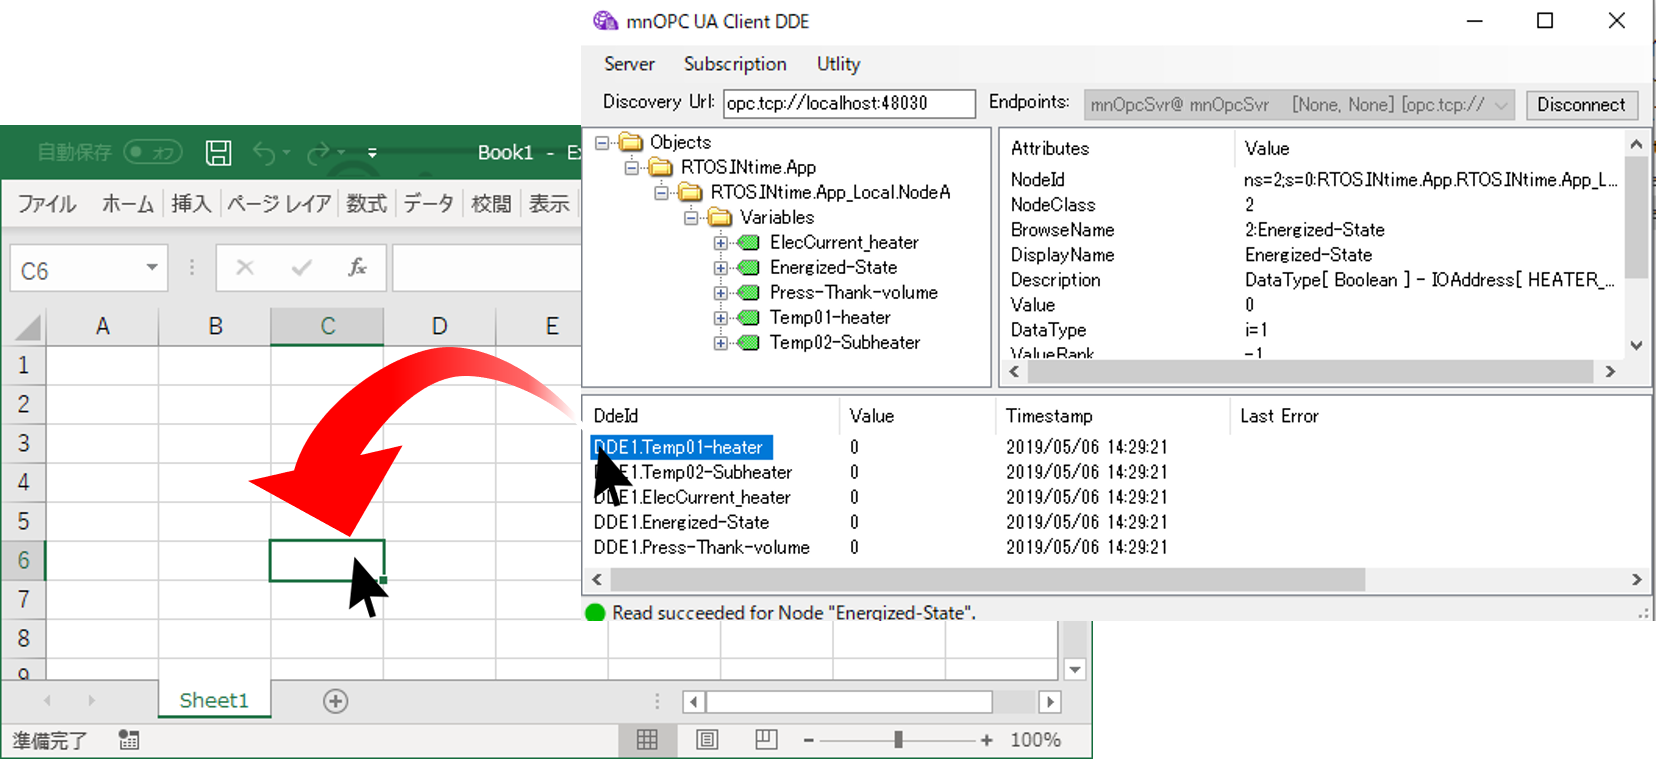 mnOPC UA Client DDE - Excel 通信 イメージ図